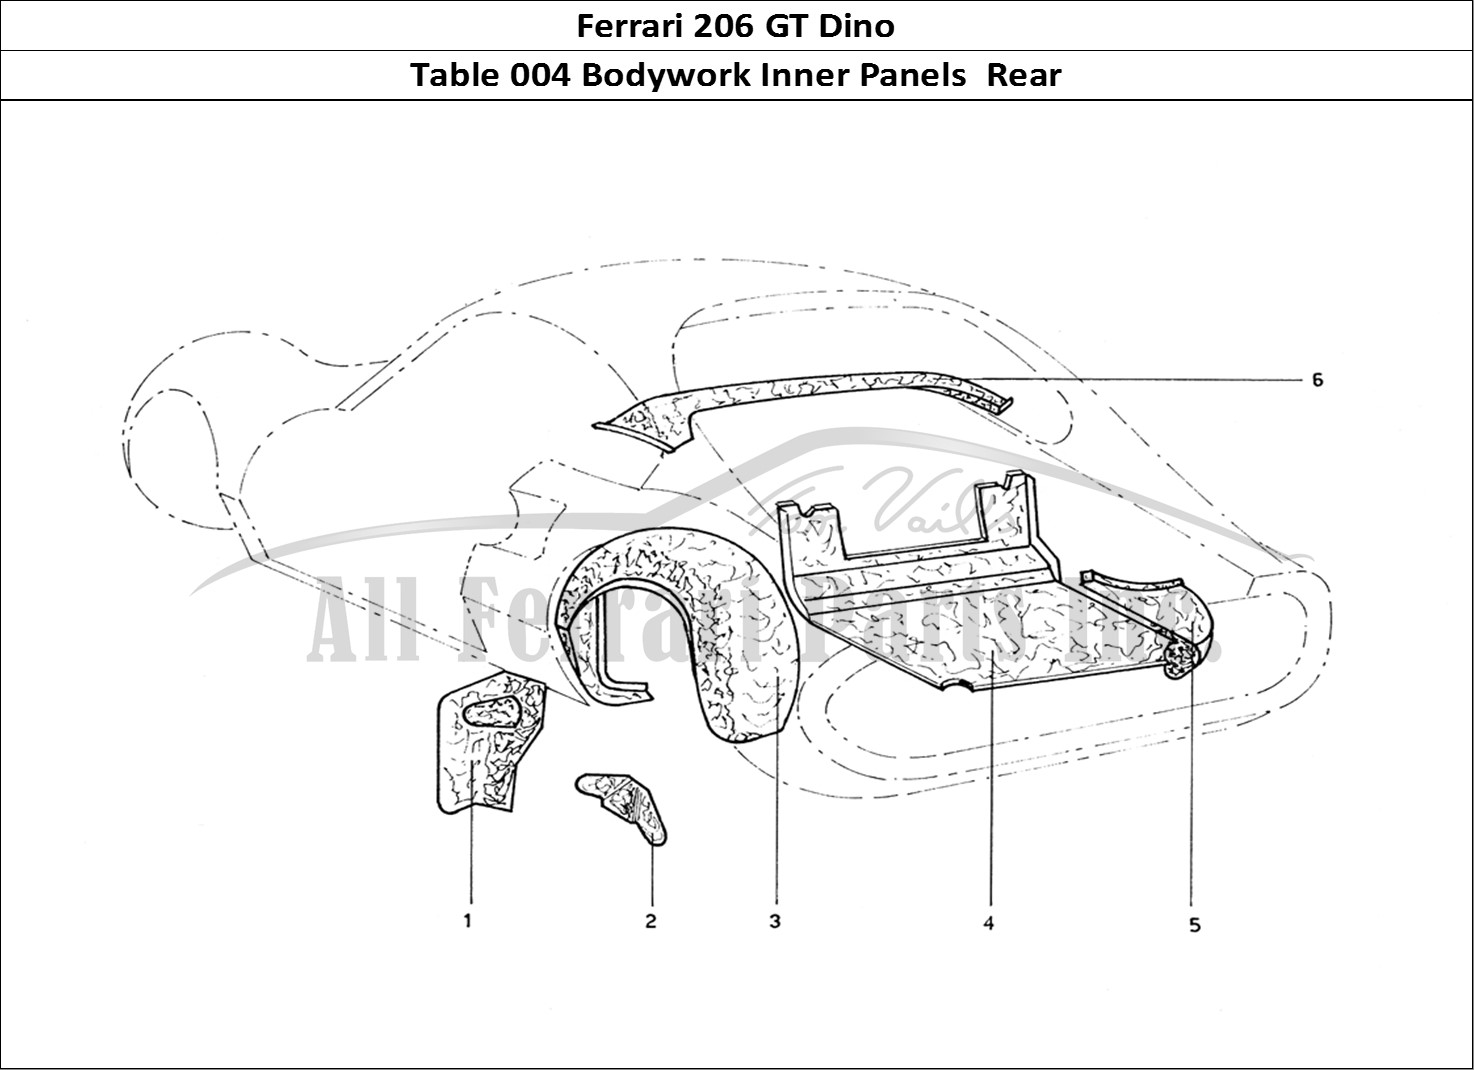 Ferrari Parts Ferrari 206 GT Dino (Coachwork) Page 004 Rear Inner Panels & Sheil